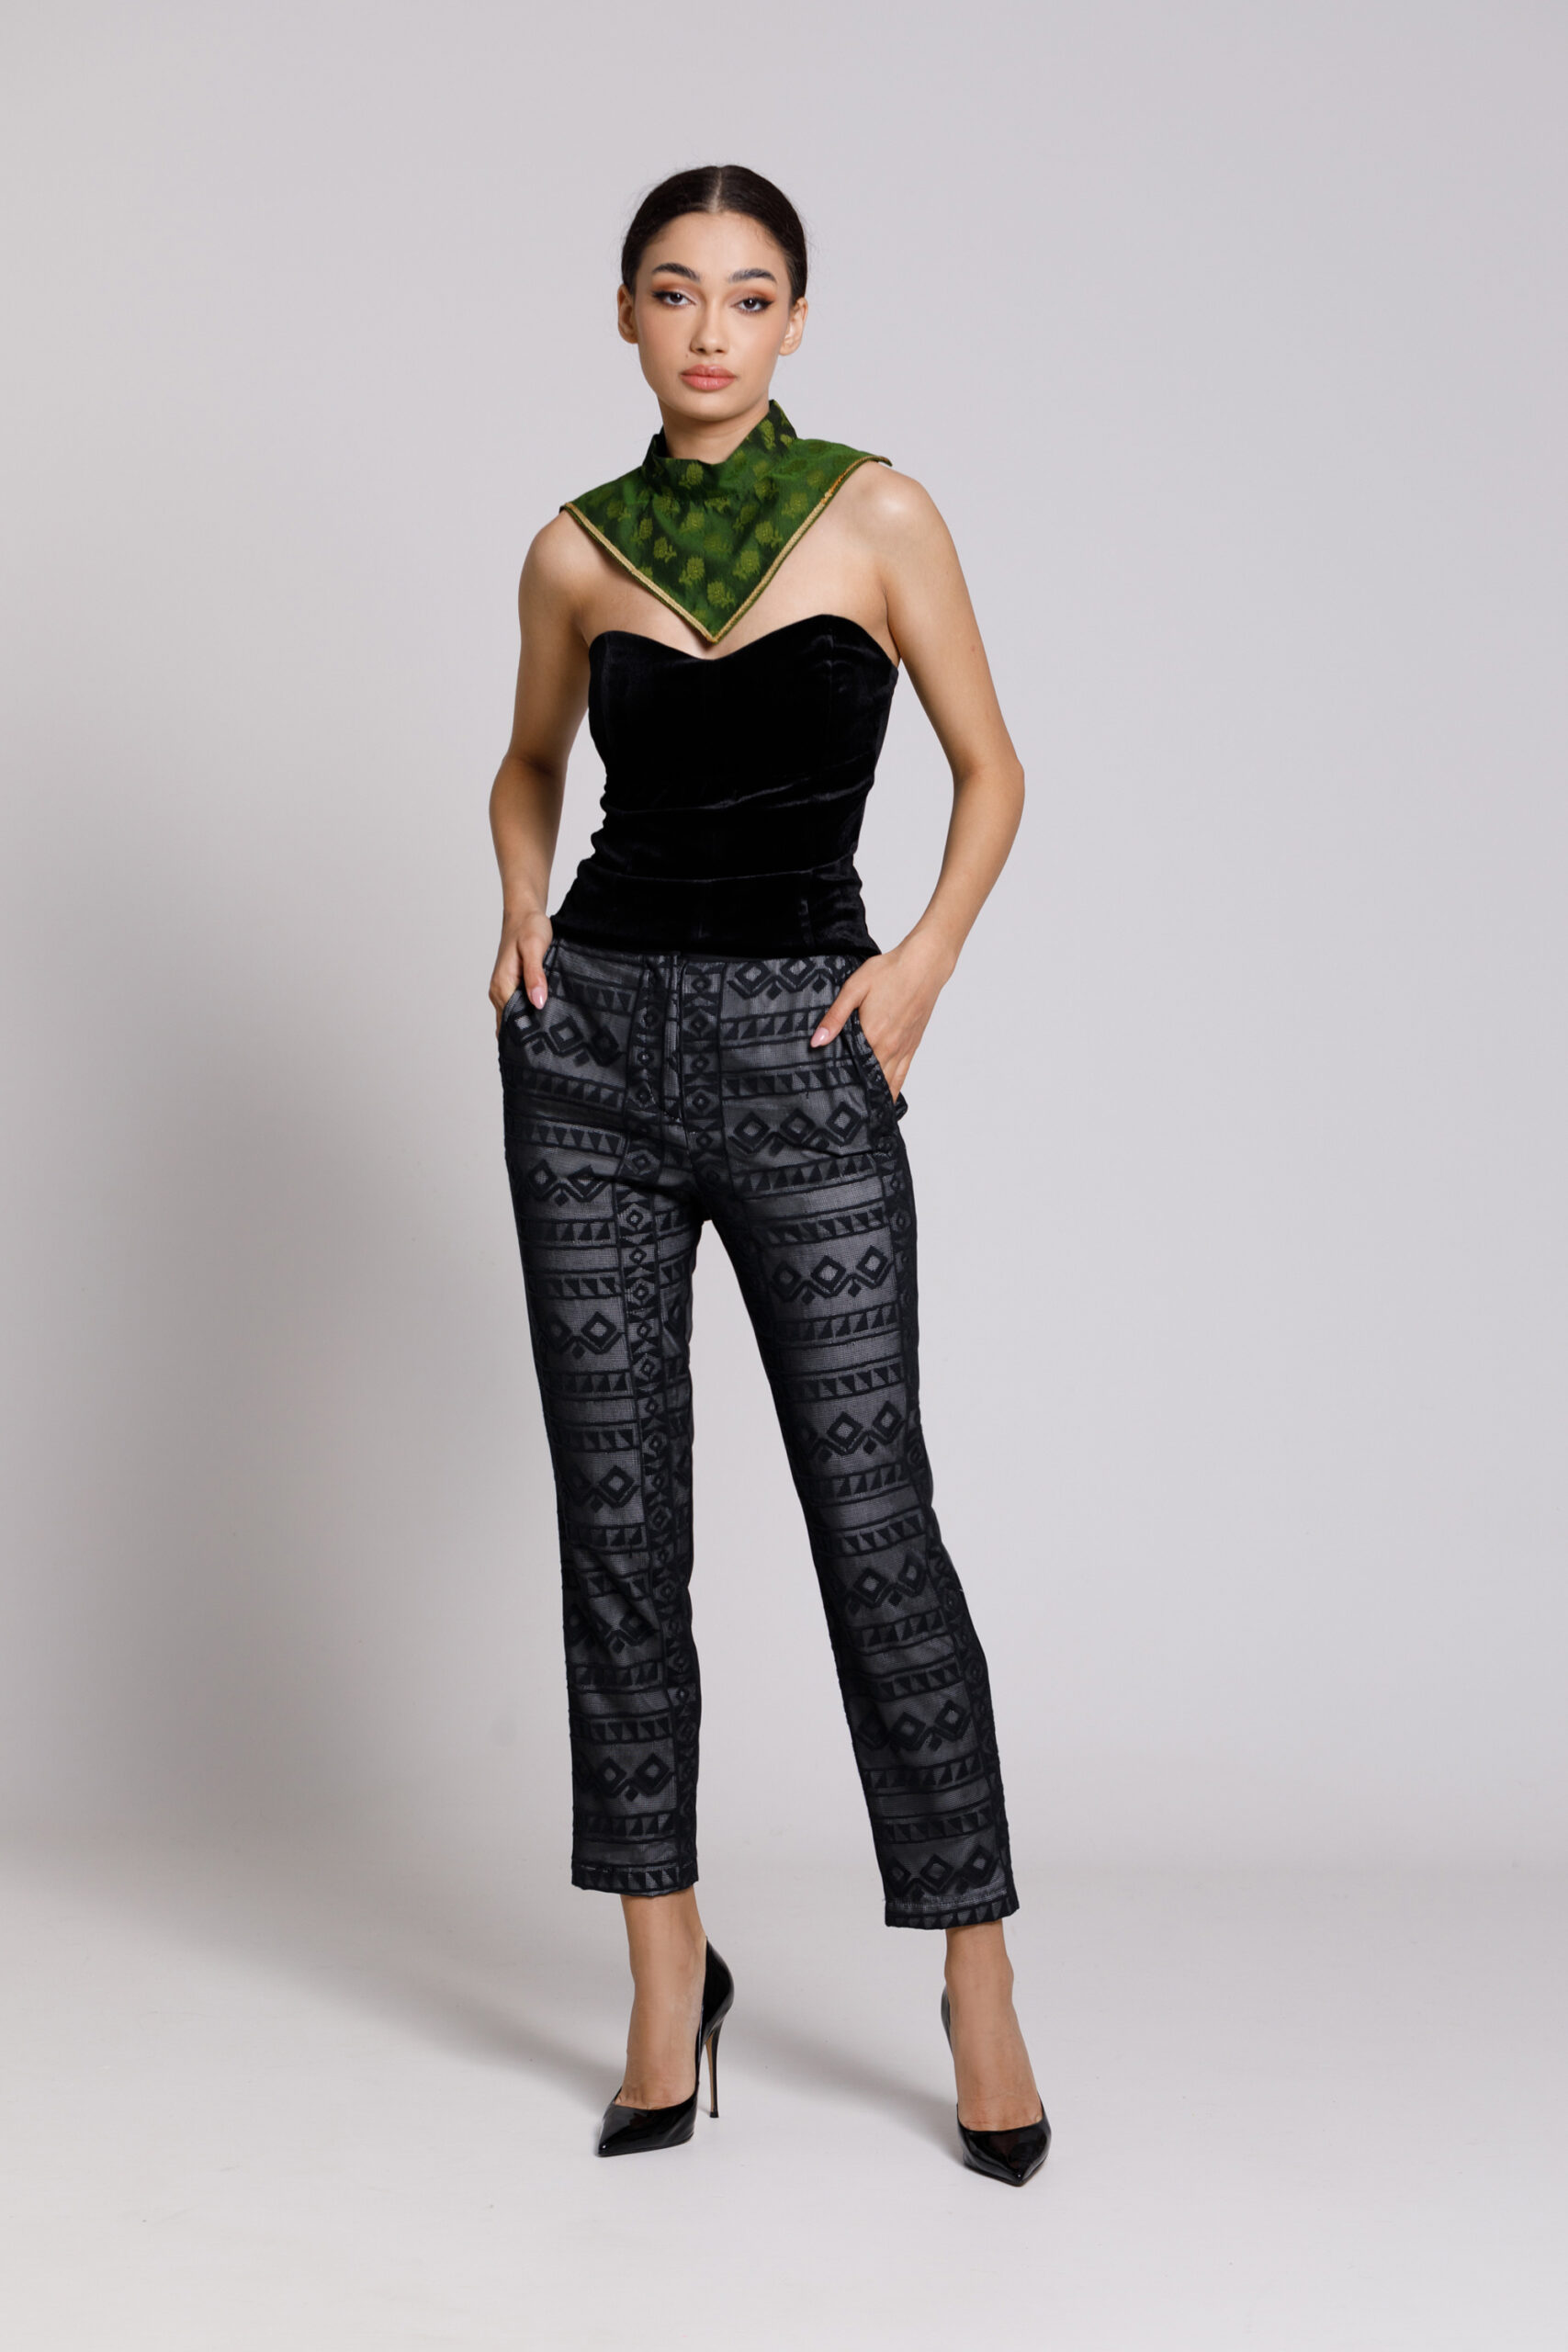 KIKO Elegant pants with black lace. Natural fabrics, original design, handmade embroidery